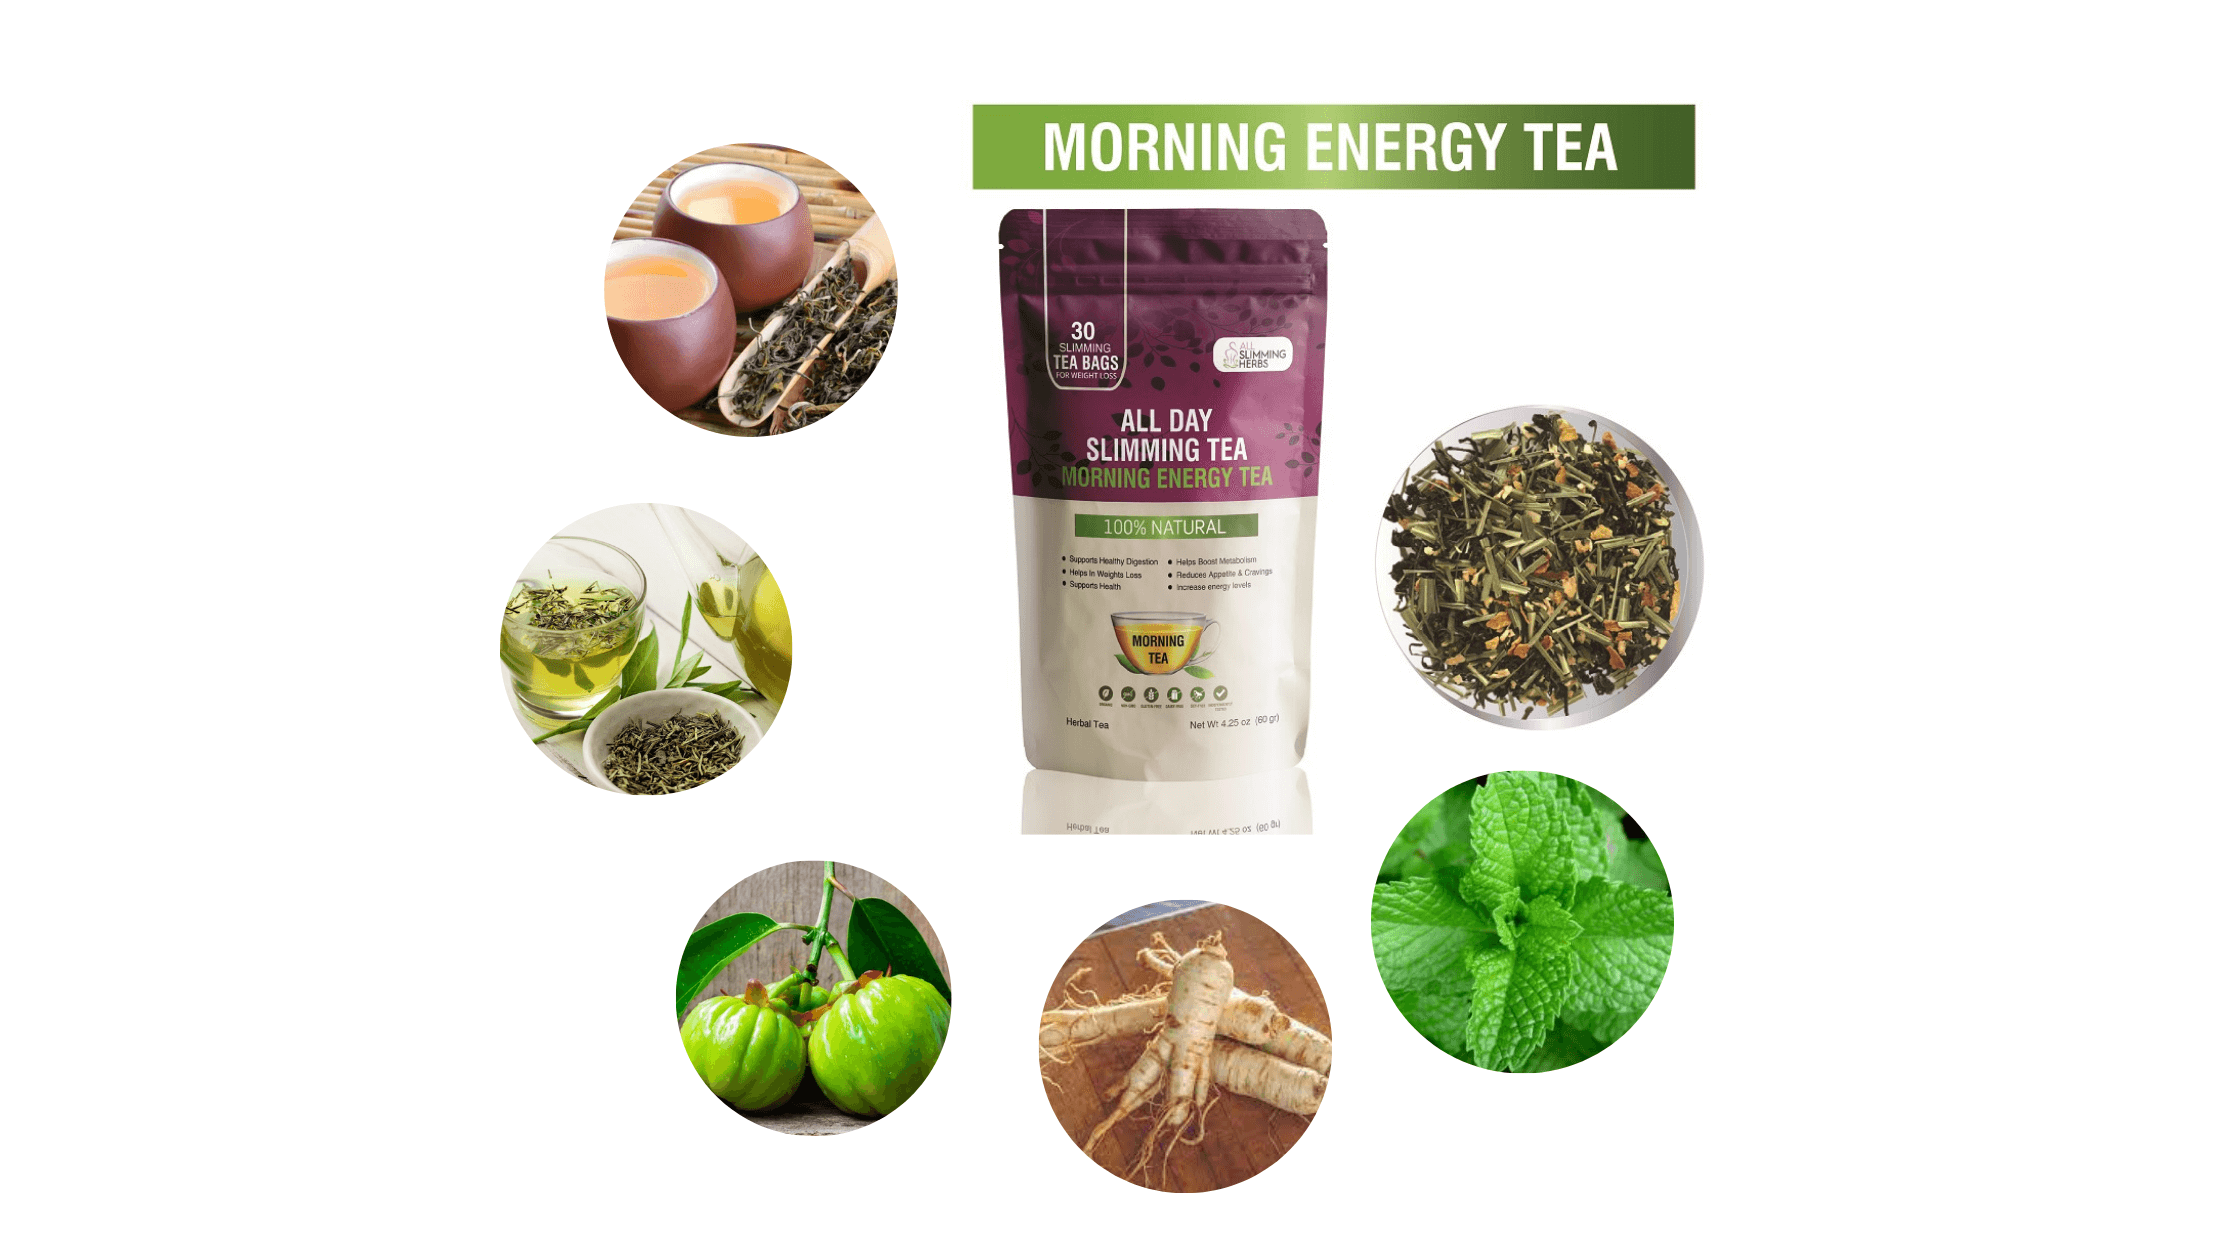 All Day Slimming Morning Tea Ingredients